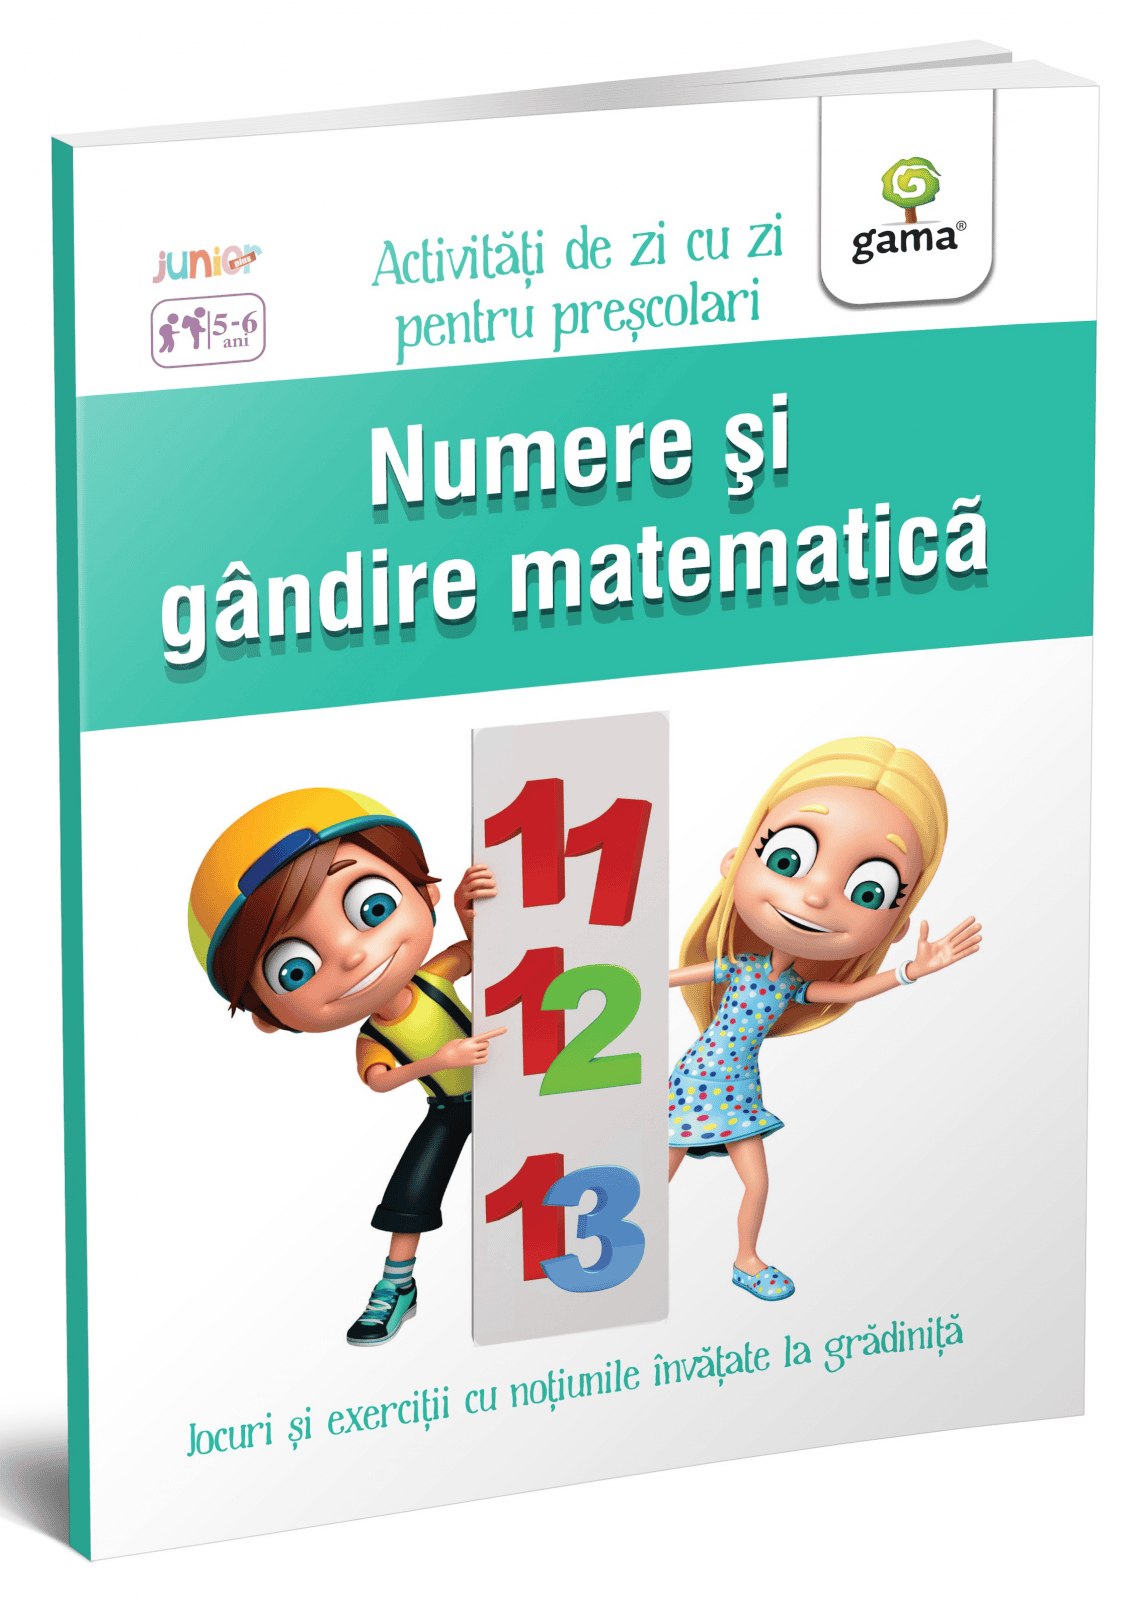 Numere si gandire matematica, Editura Gama, 4-5 ani +